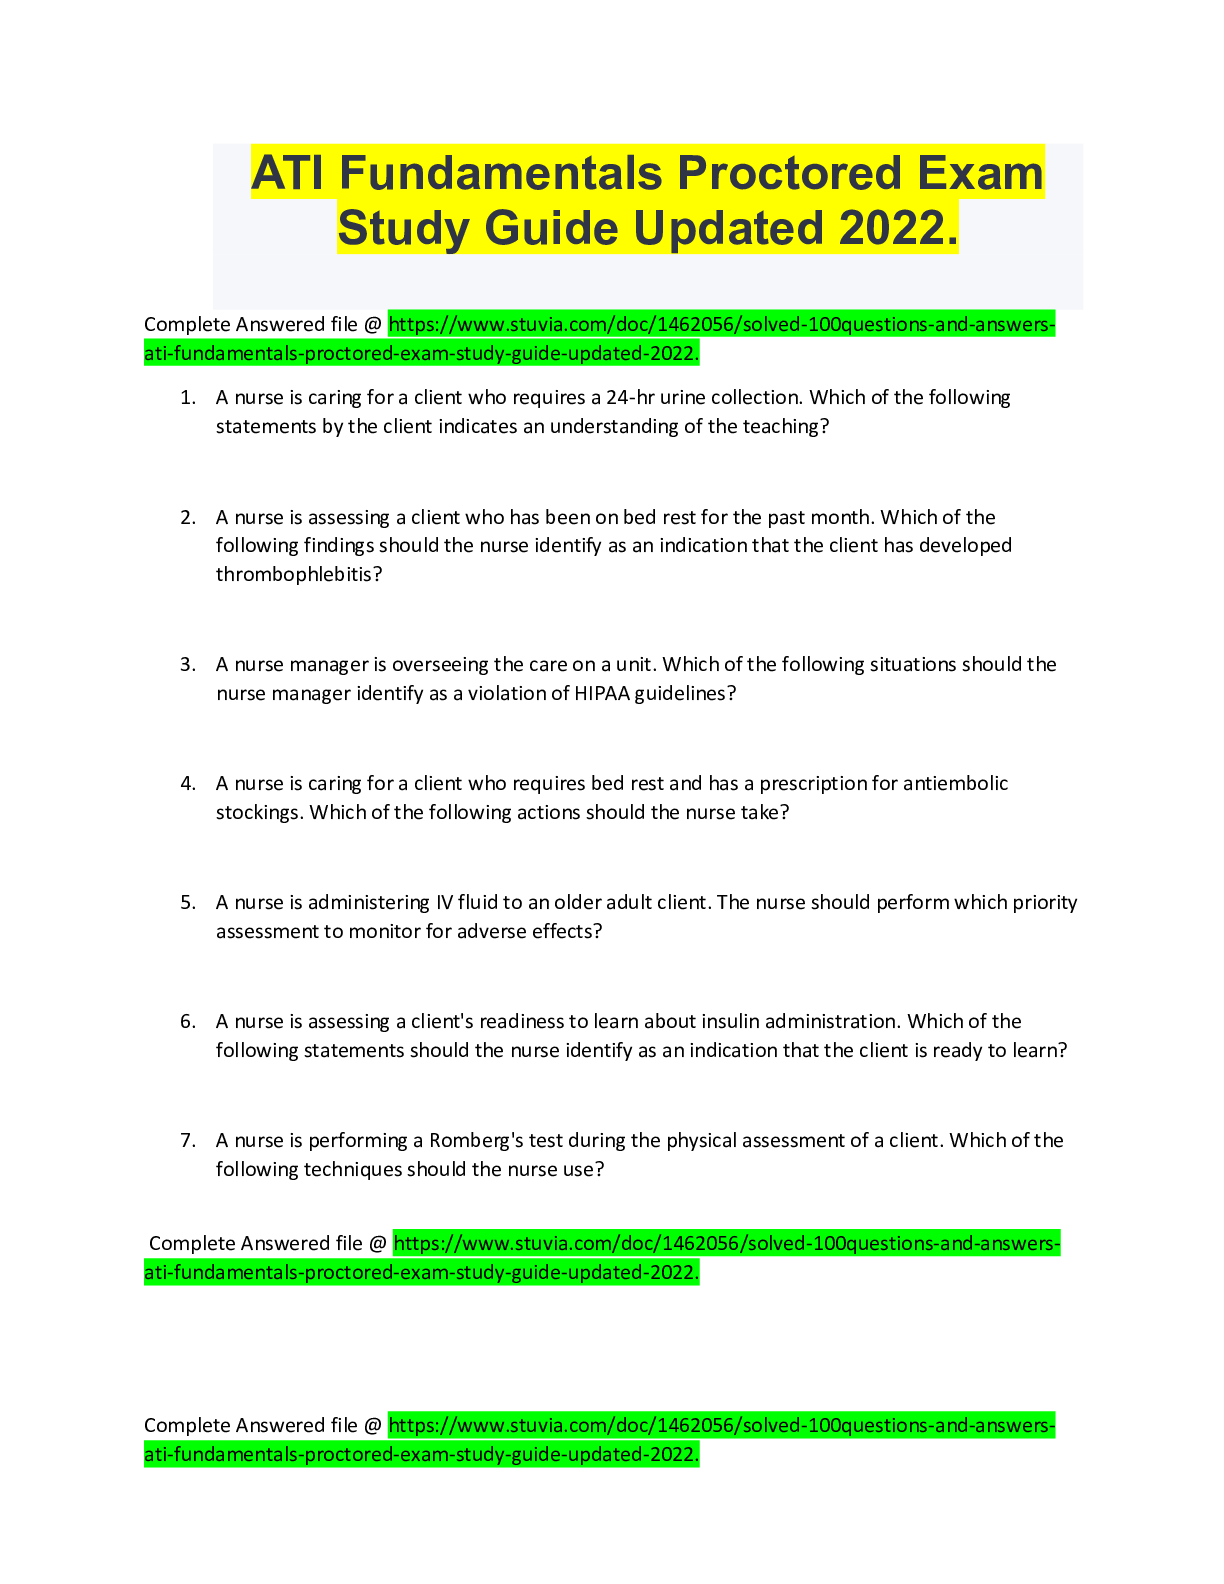 ATI Fundamentals Proctored Exam Study Guide Updated 2022. DOWNLOAD